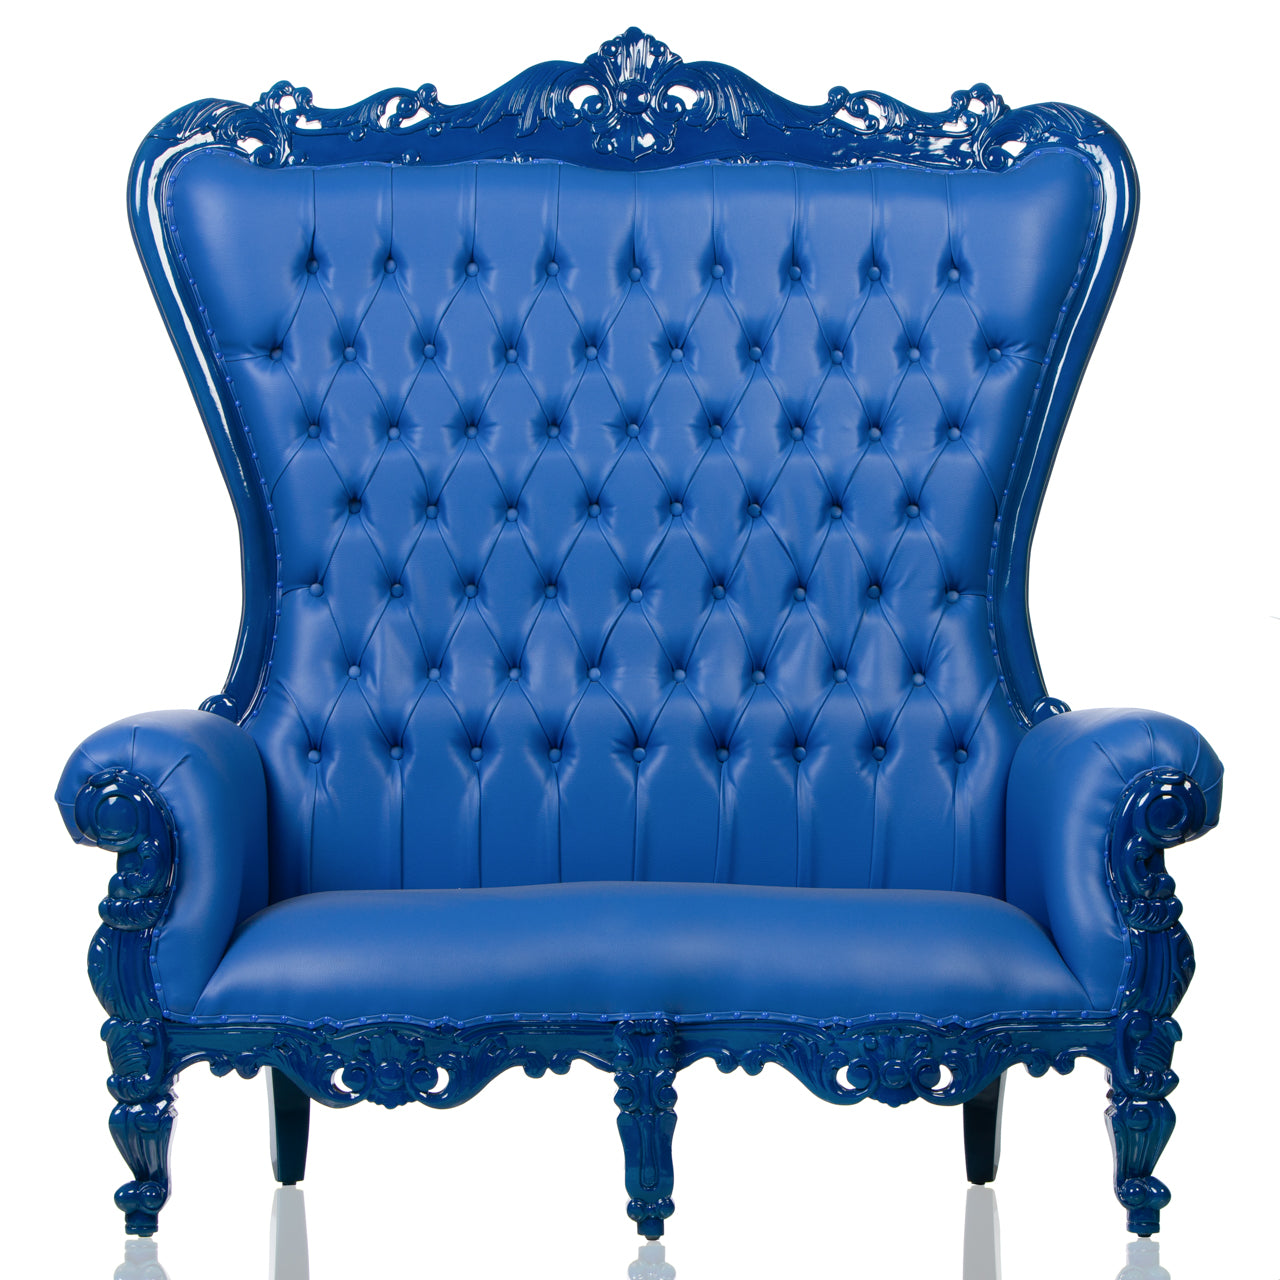 Florida Blue Double Throne Blue/Blue Leather (West Coast)